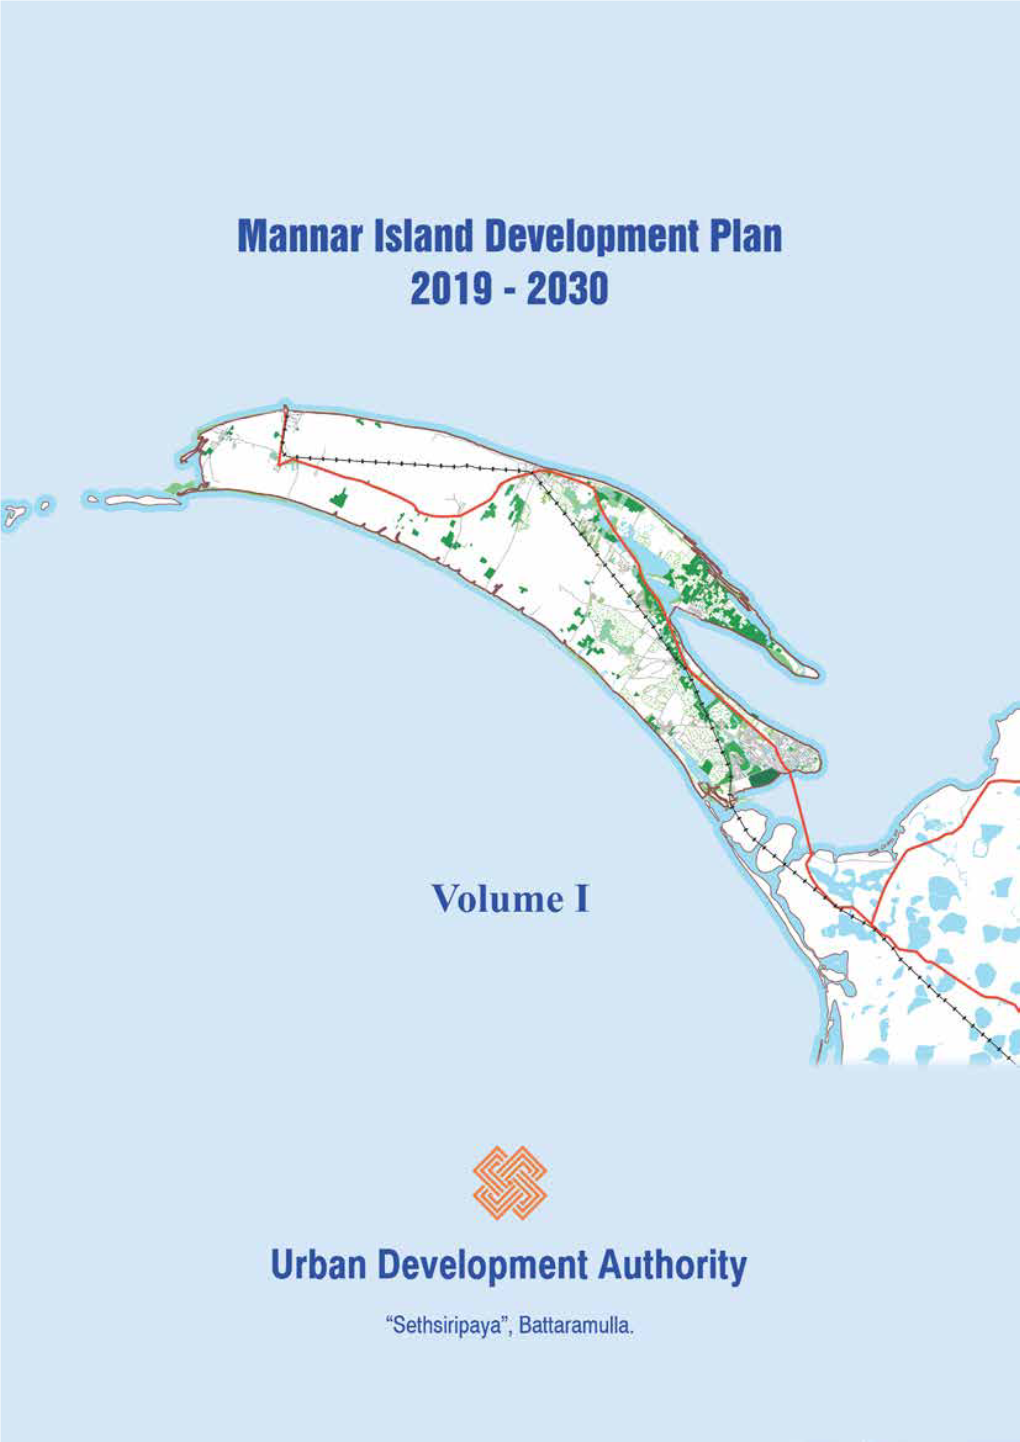 Mannar Island Development Plan 2019-2030 Volume I